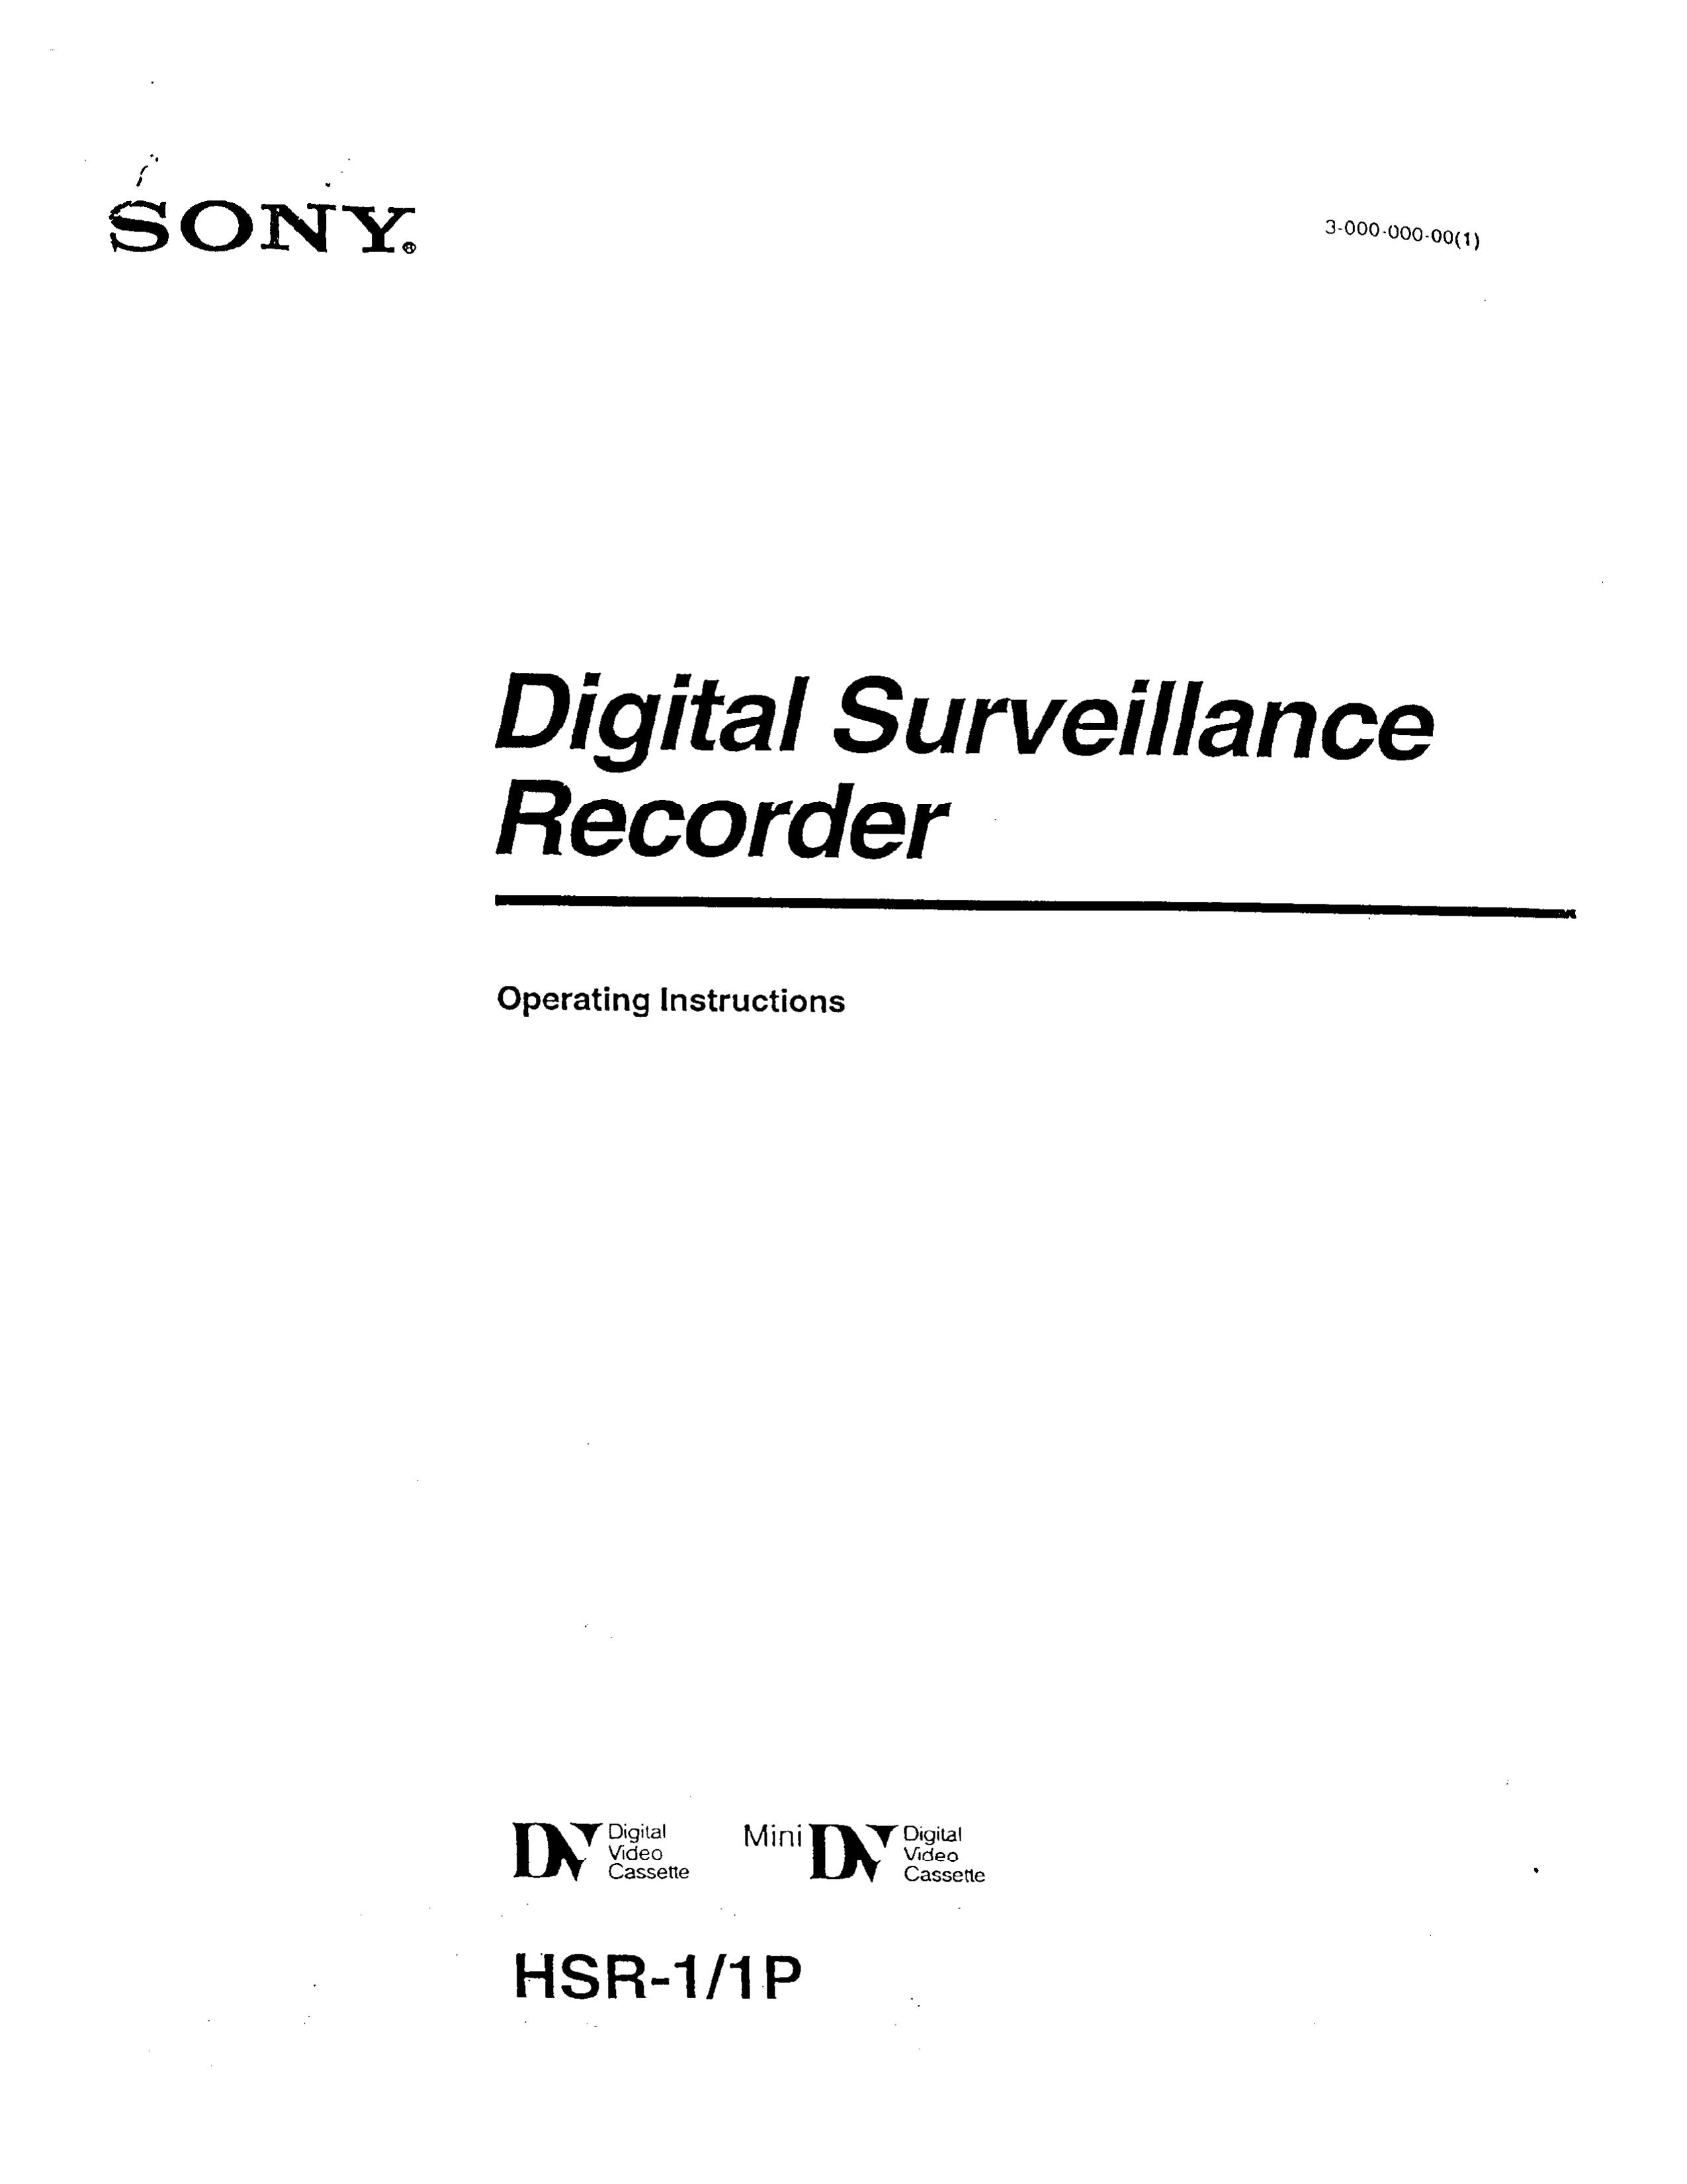 Sony HSR-1/1P Security Camera User Manual